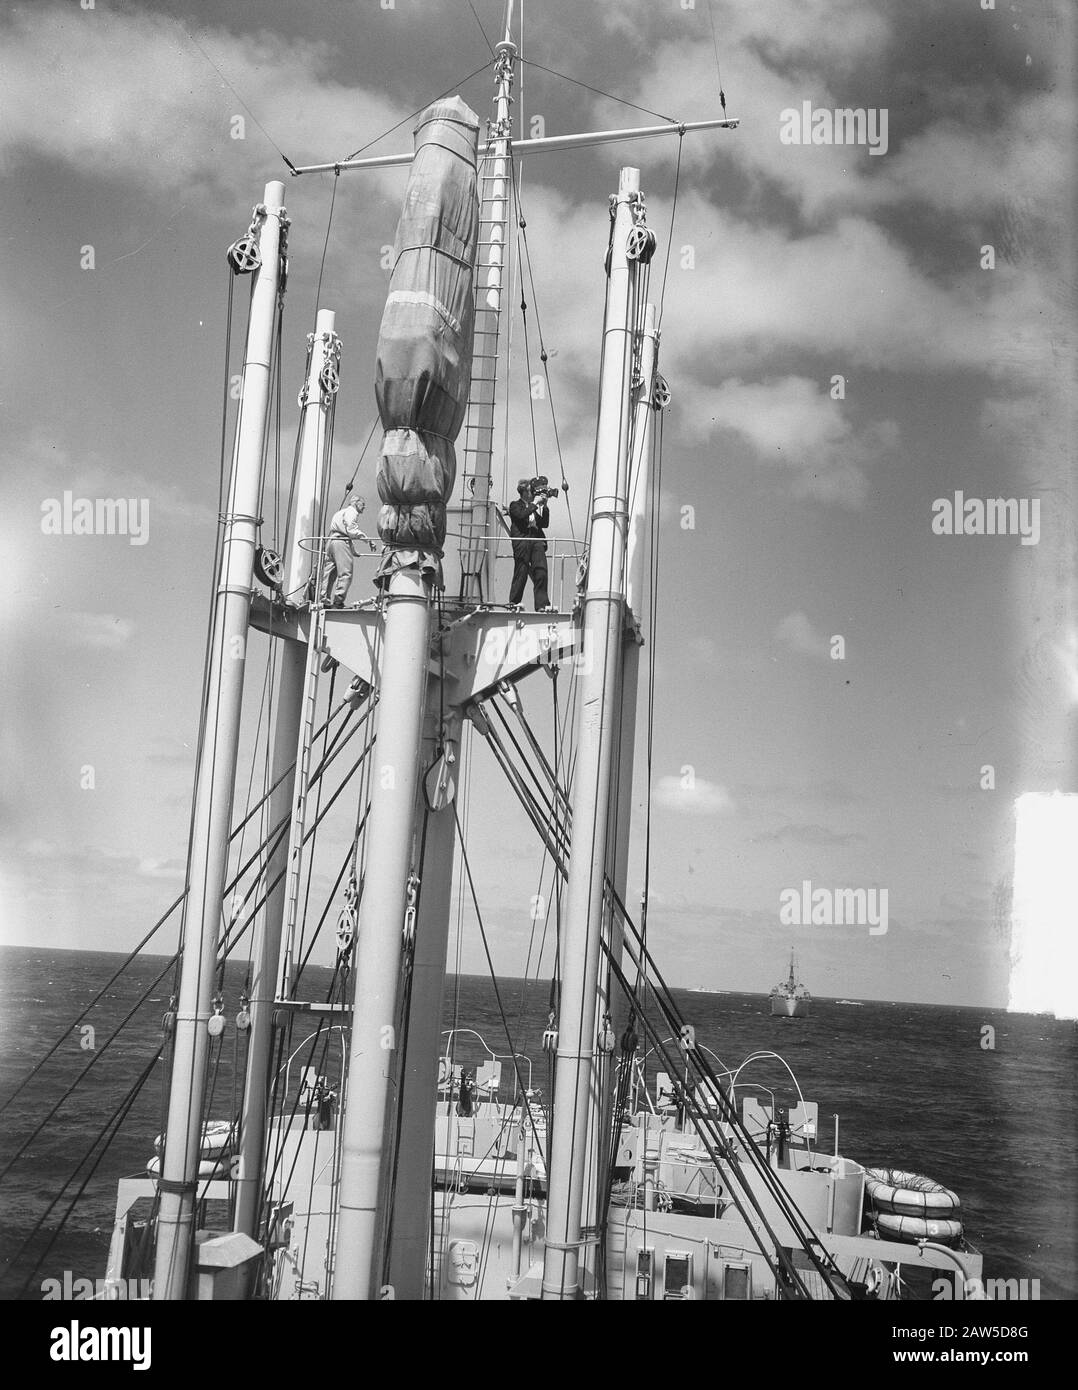 Maneuvers Western Fleet. Cameraman high mast Date: July 9, 1949 Location: North Sea Keywords: cameramen, marine, military vessels Stock Photo